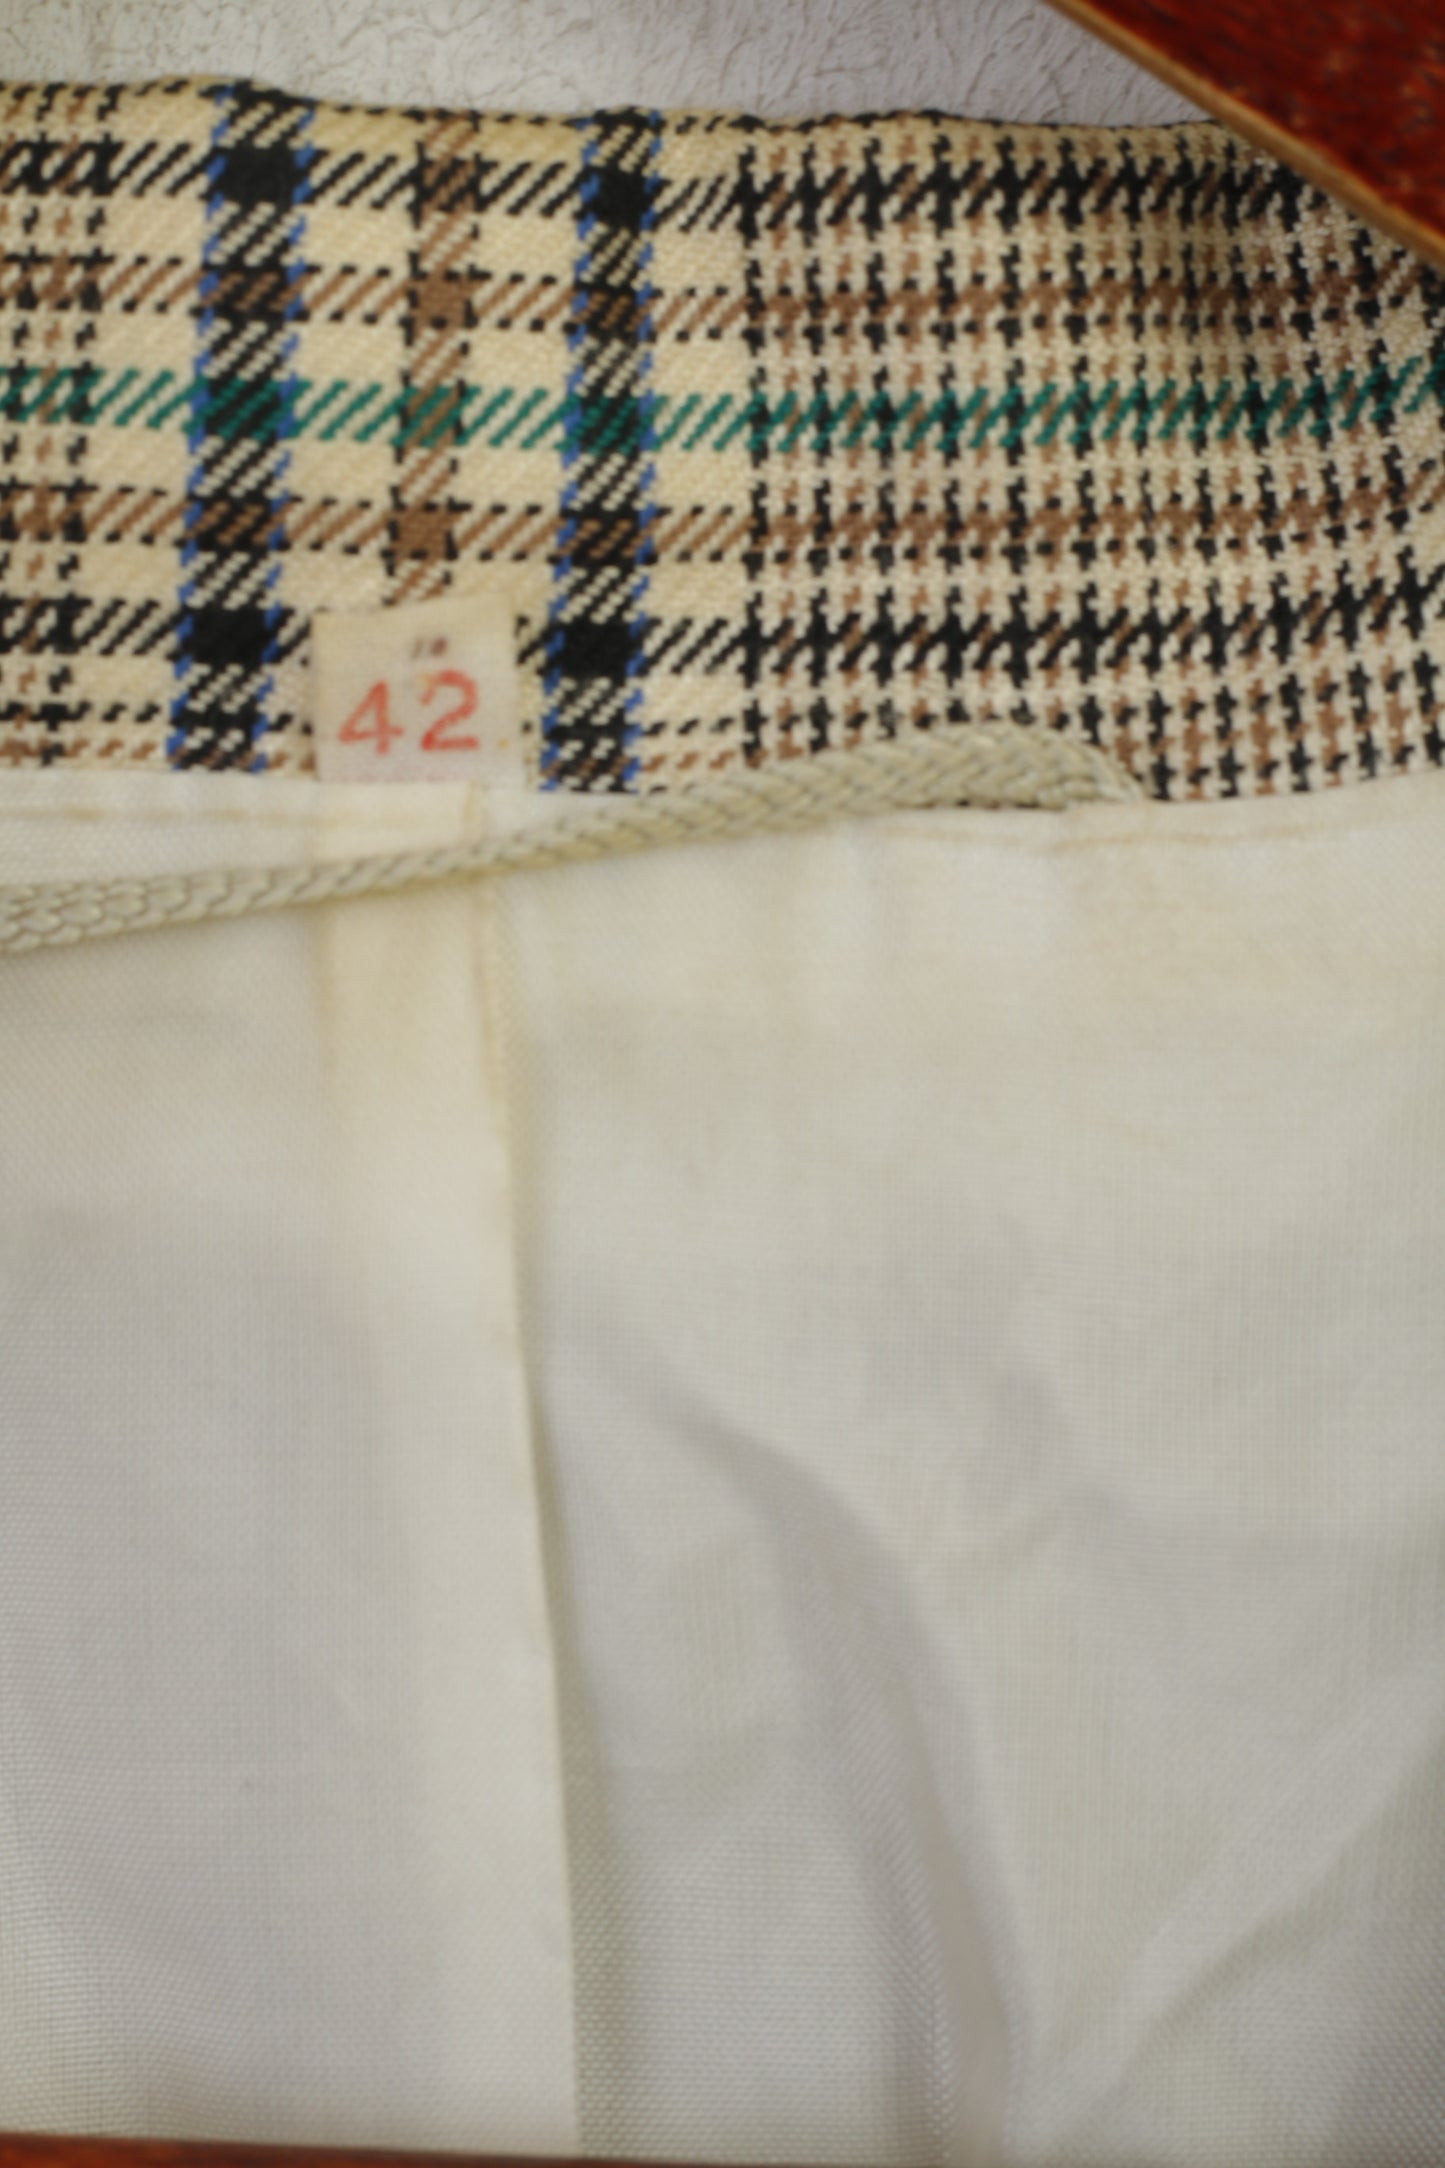 Sebastiano Women 42 XL Blazer Beige Wool Check Double Breasted Vintage Jacket